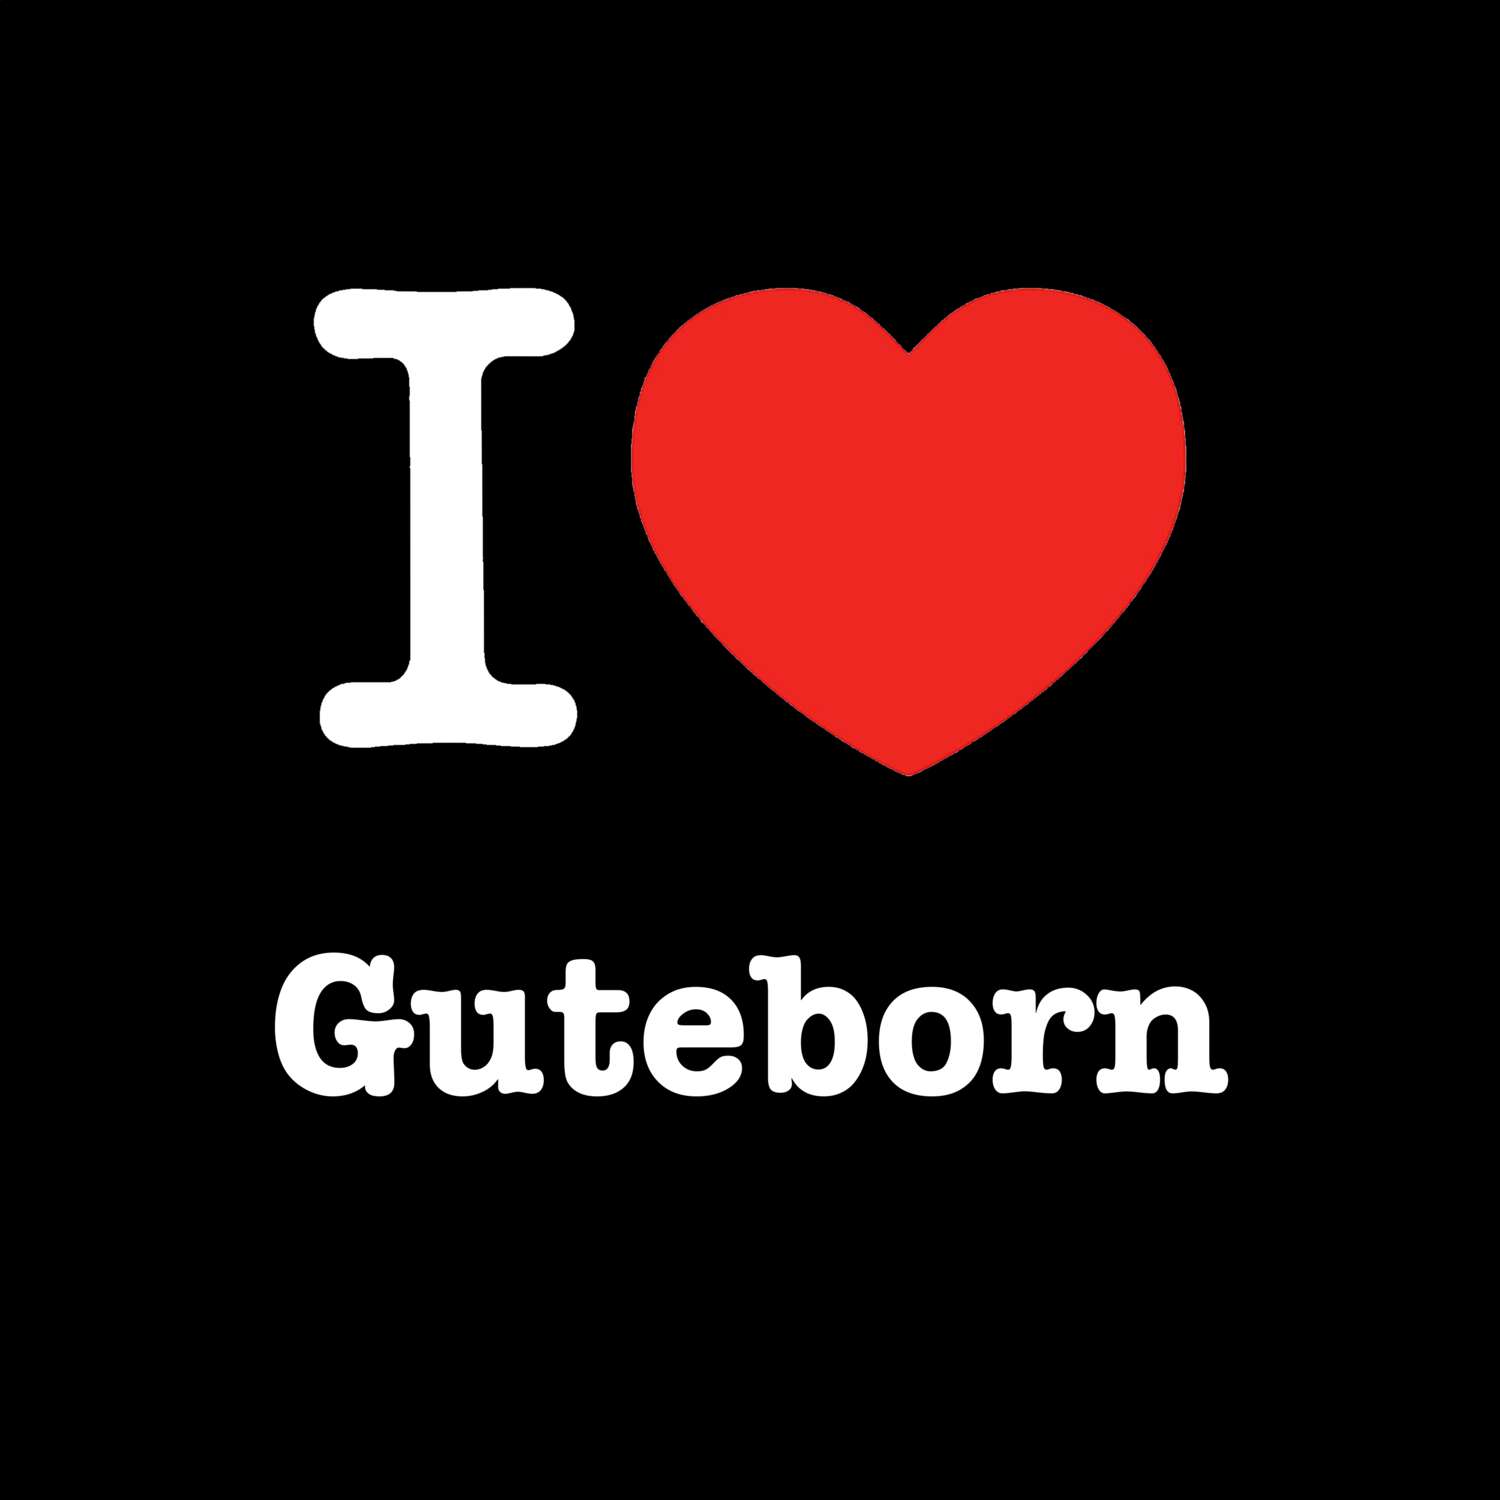 Guteborn T-Shirt »I love«